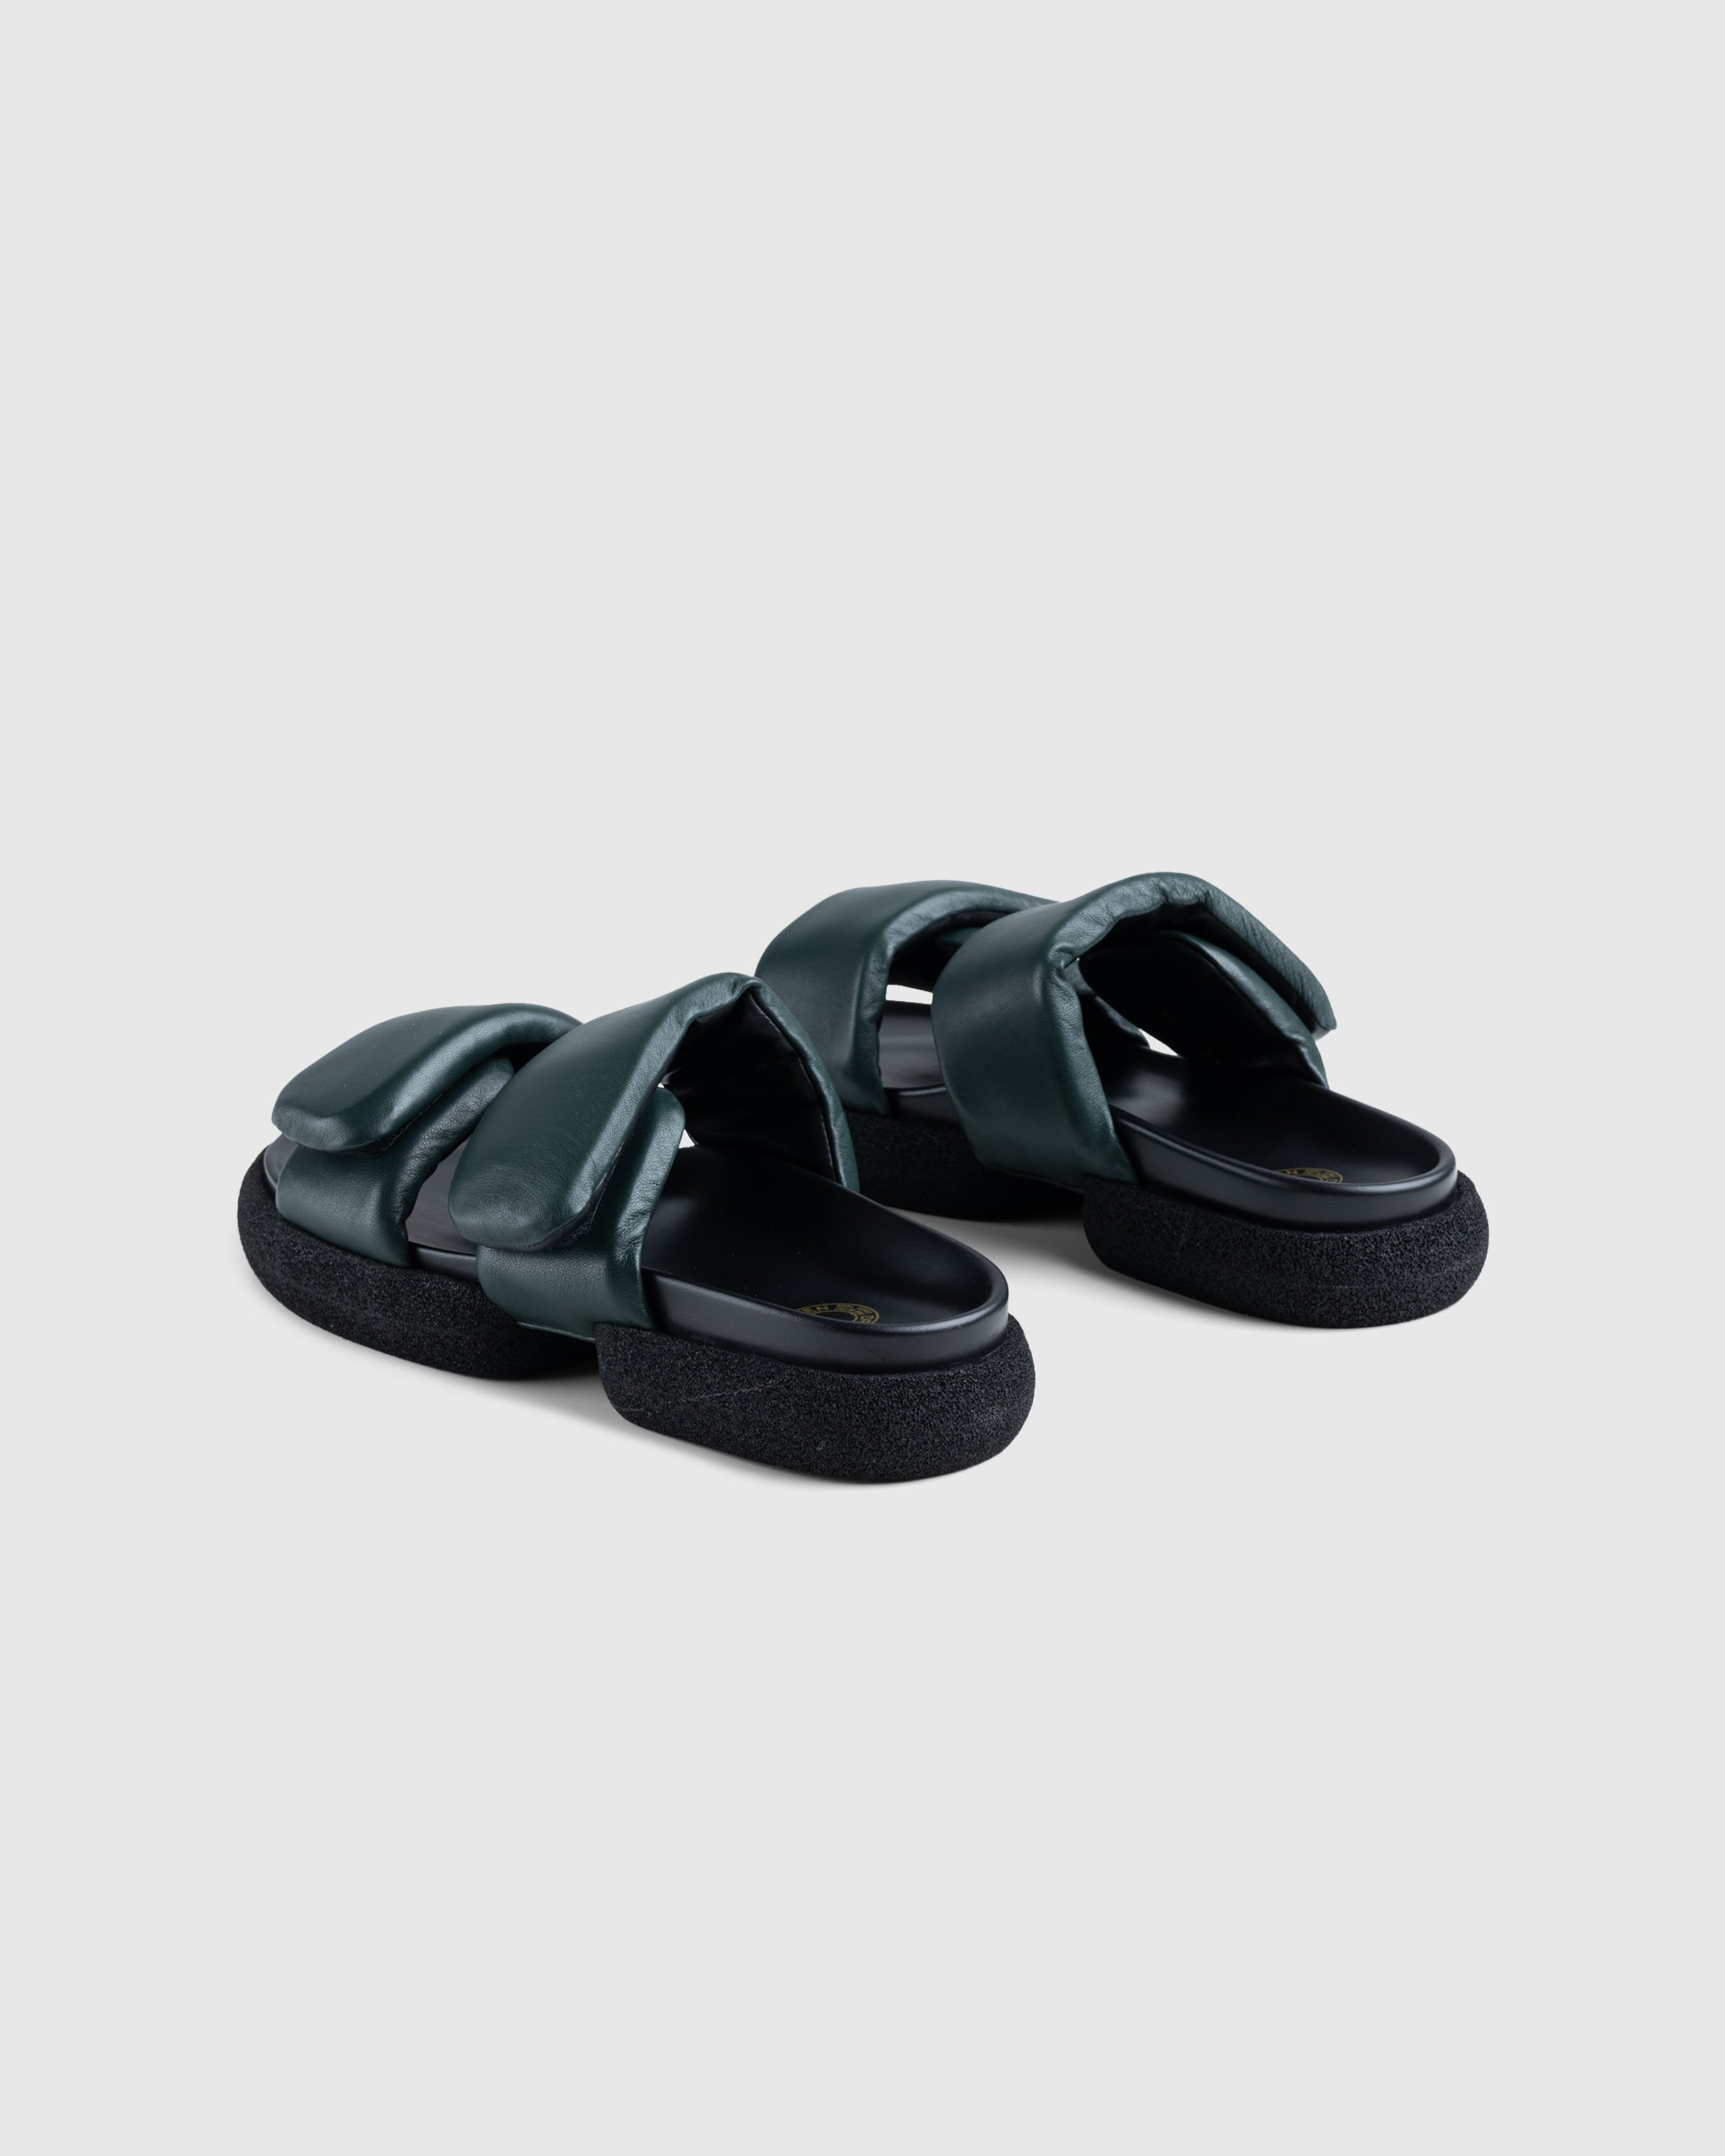 Dries van Noten - Leather Platform Sandals Green - Footwear - Green - Image 4